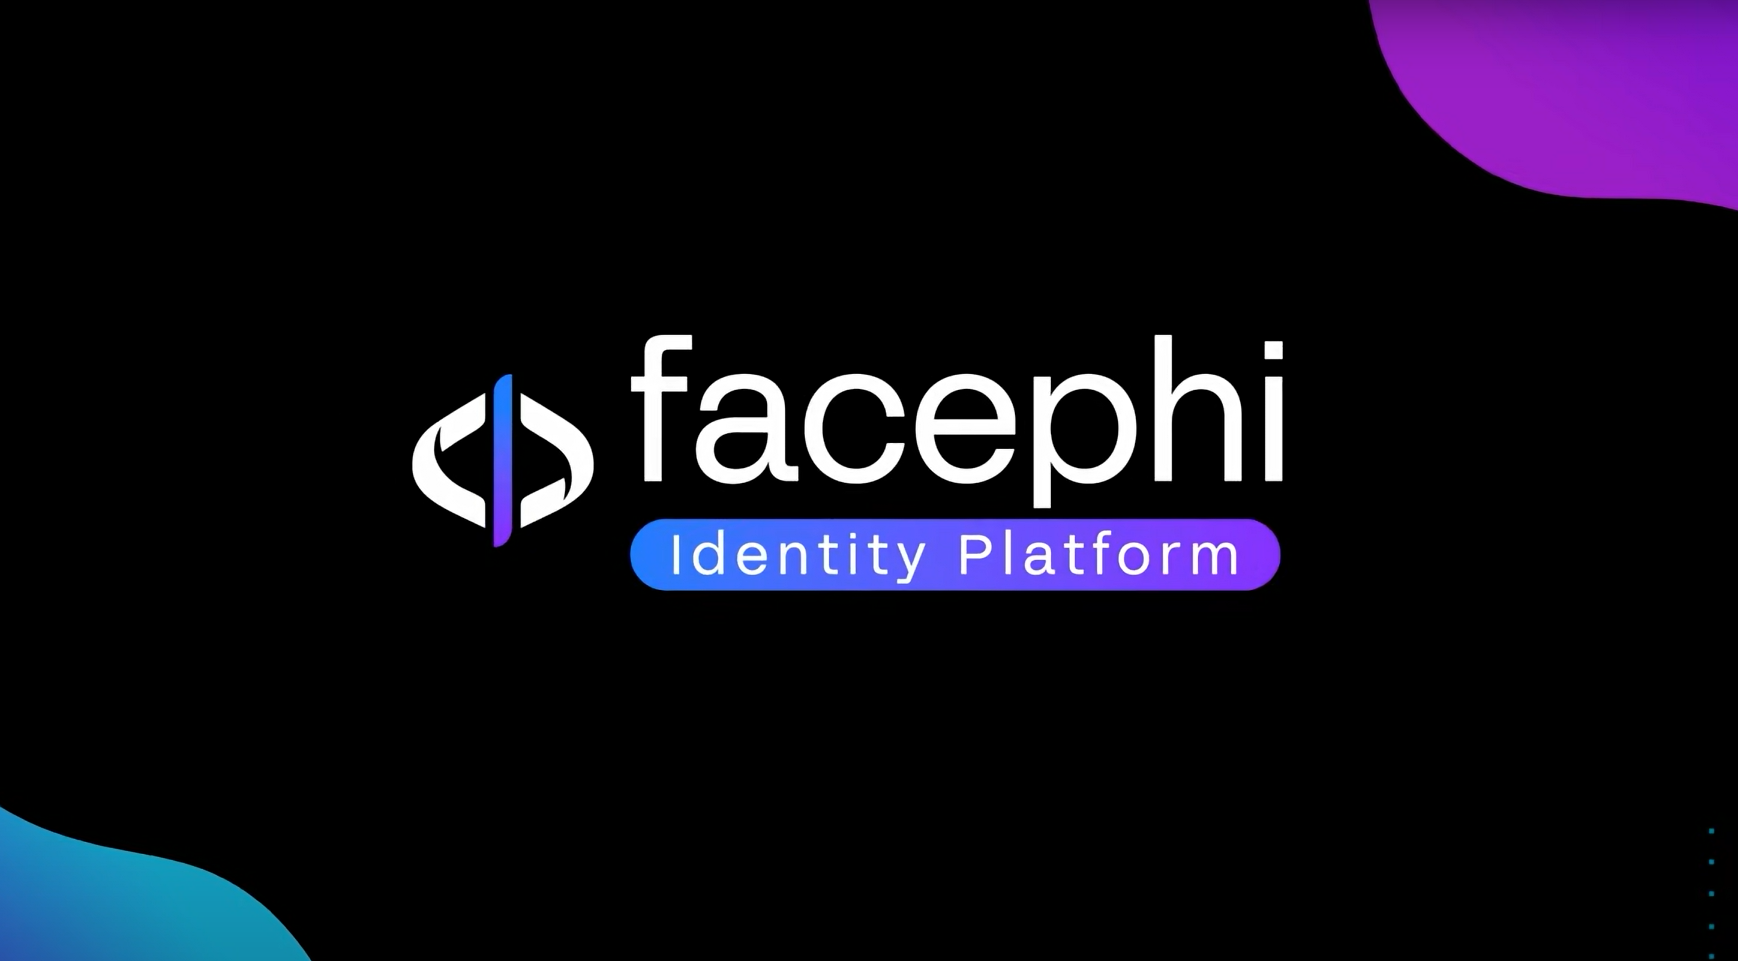 Facephi Identity Platform